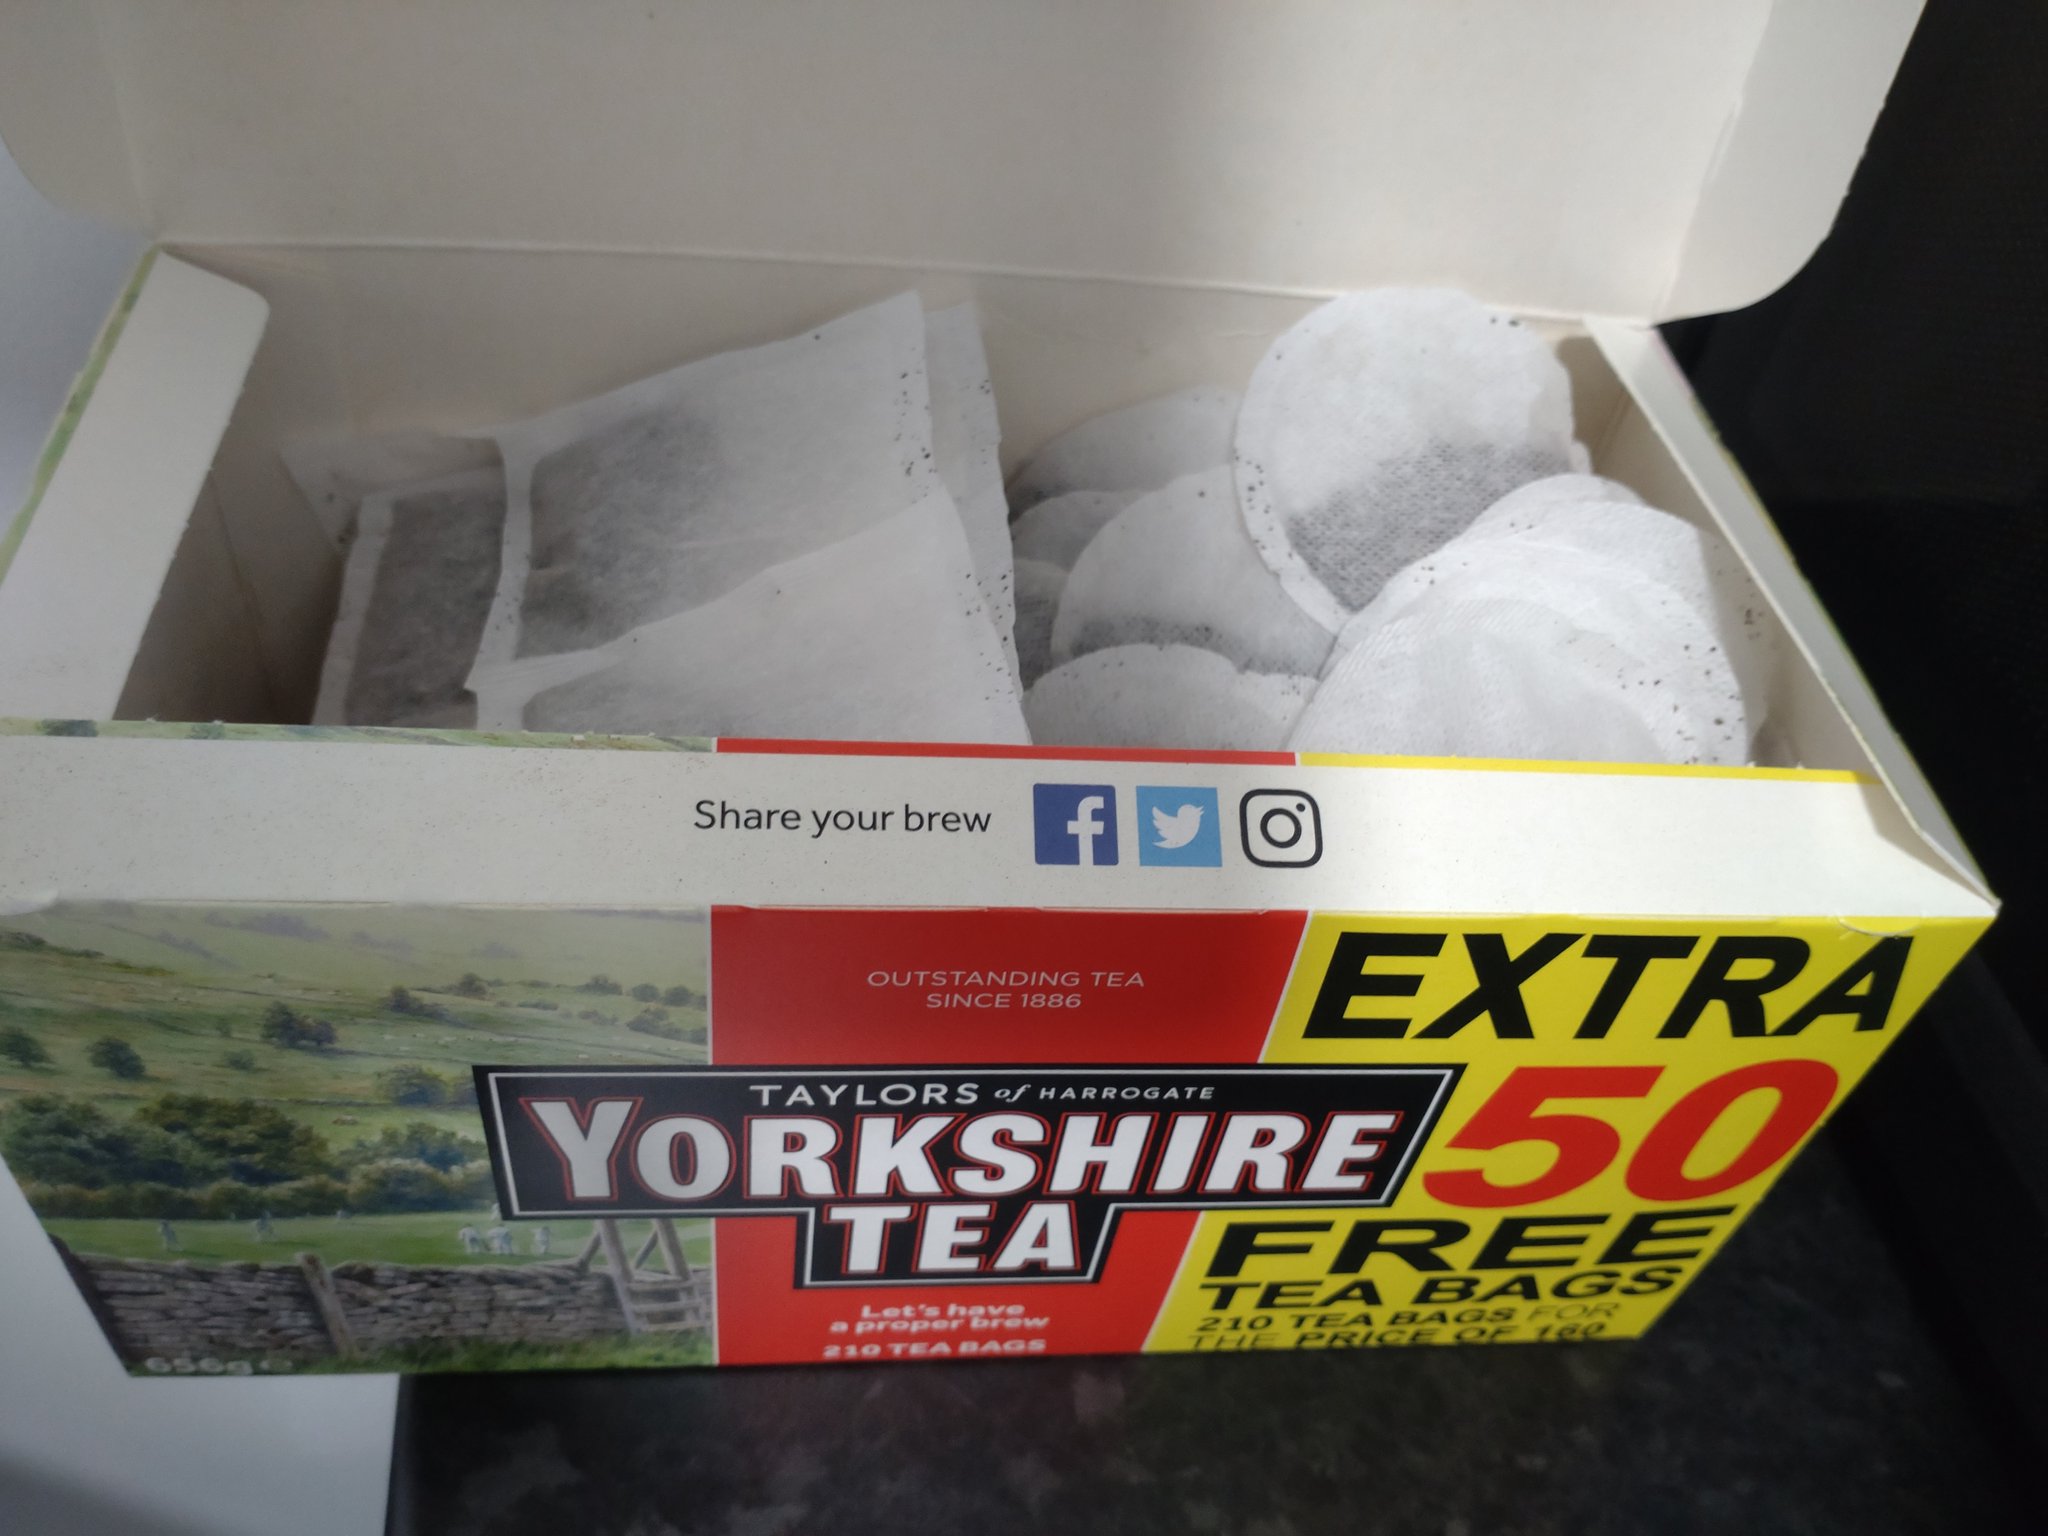 Yorkshire Tea Teabags 240 per pack